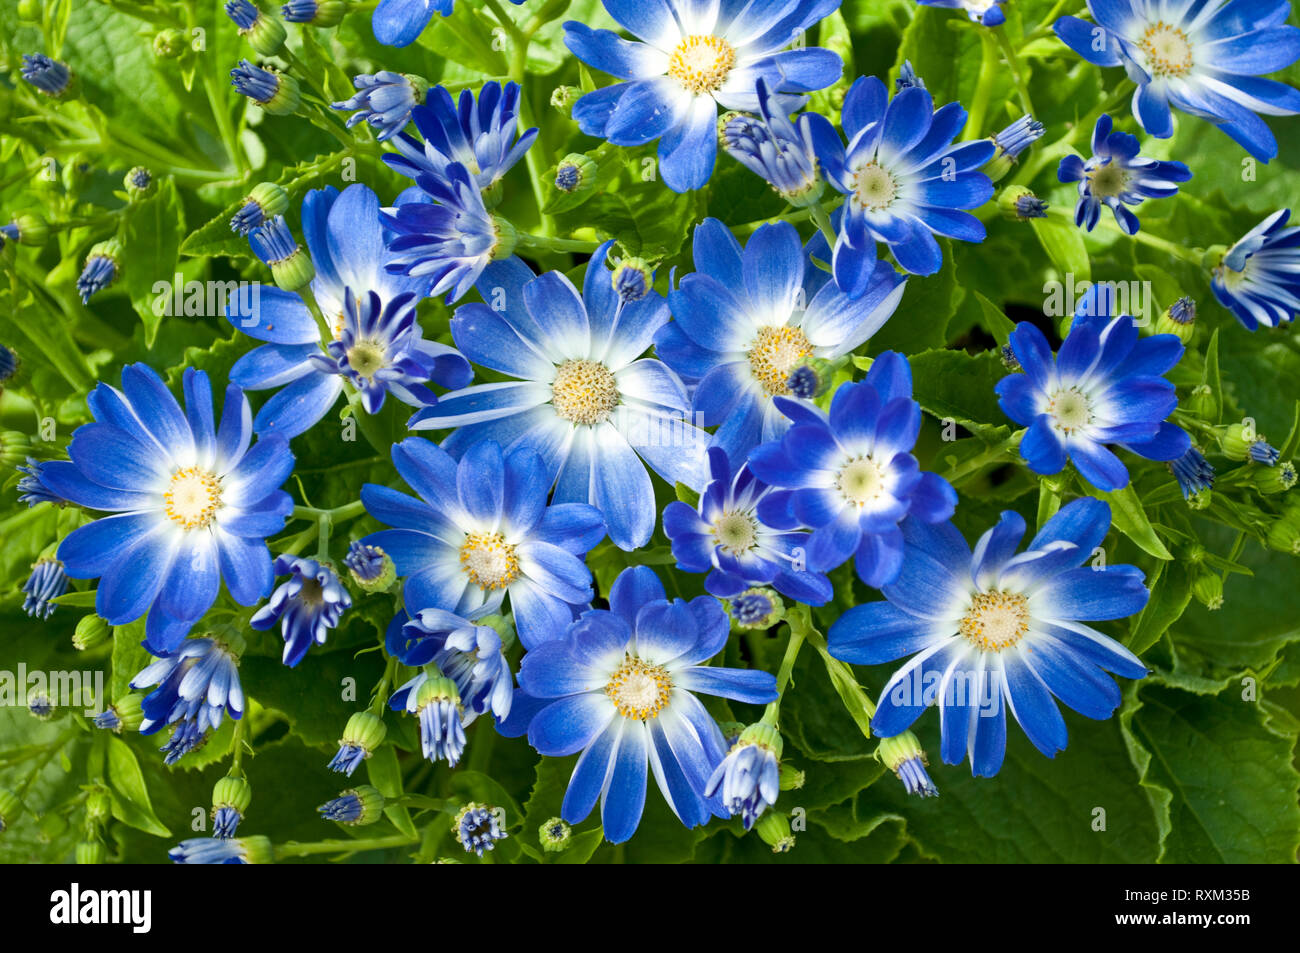 Small blue and white flowers Cineraria flowers, Pericallis x hybrida Stock Photo